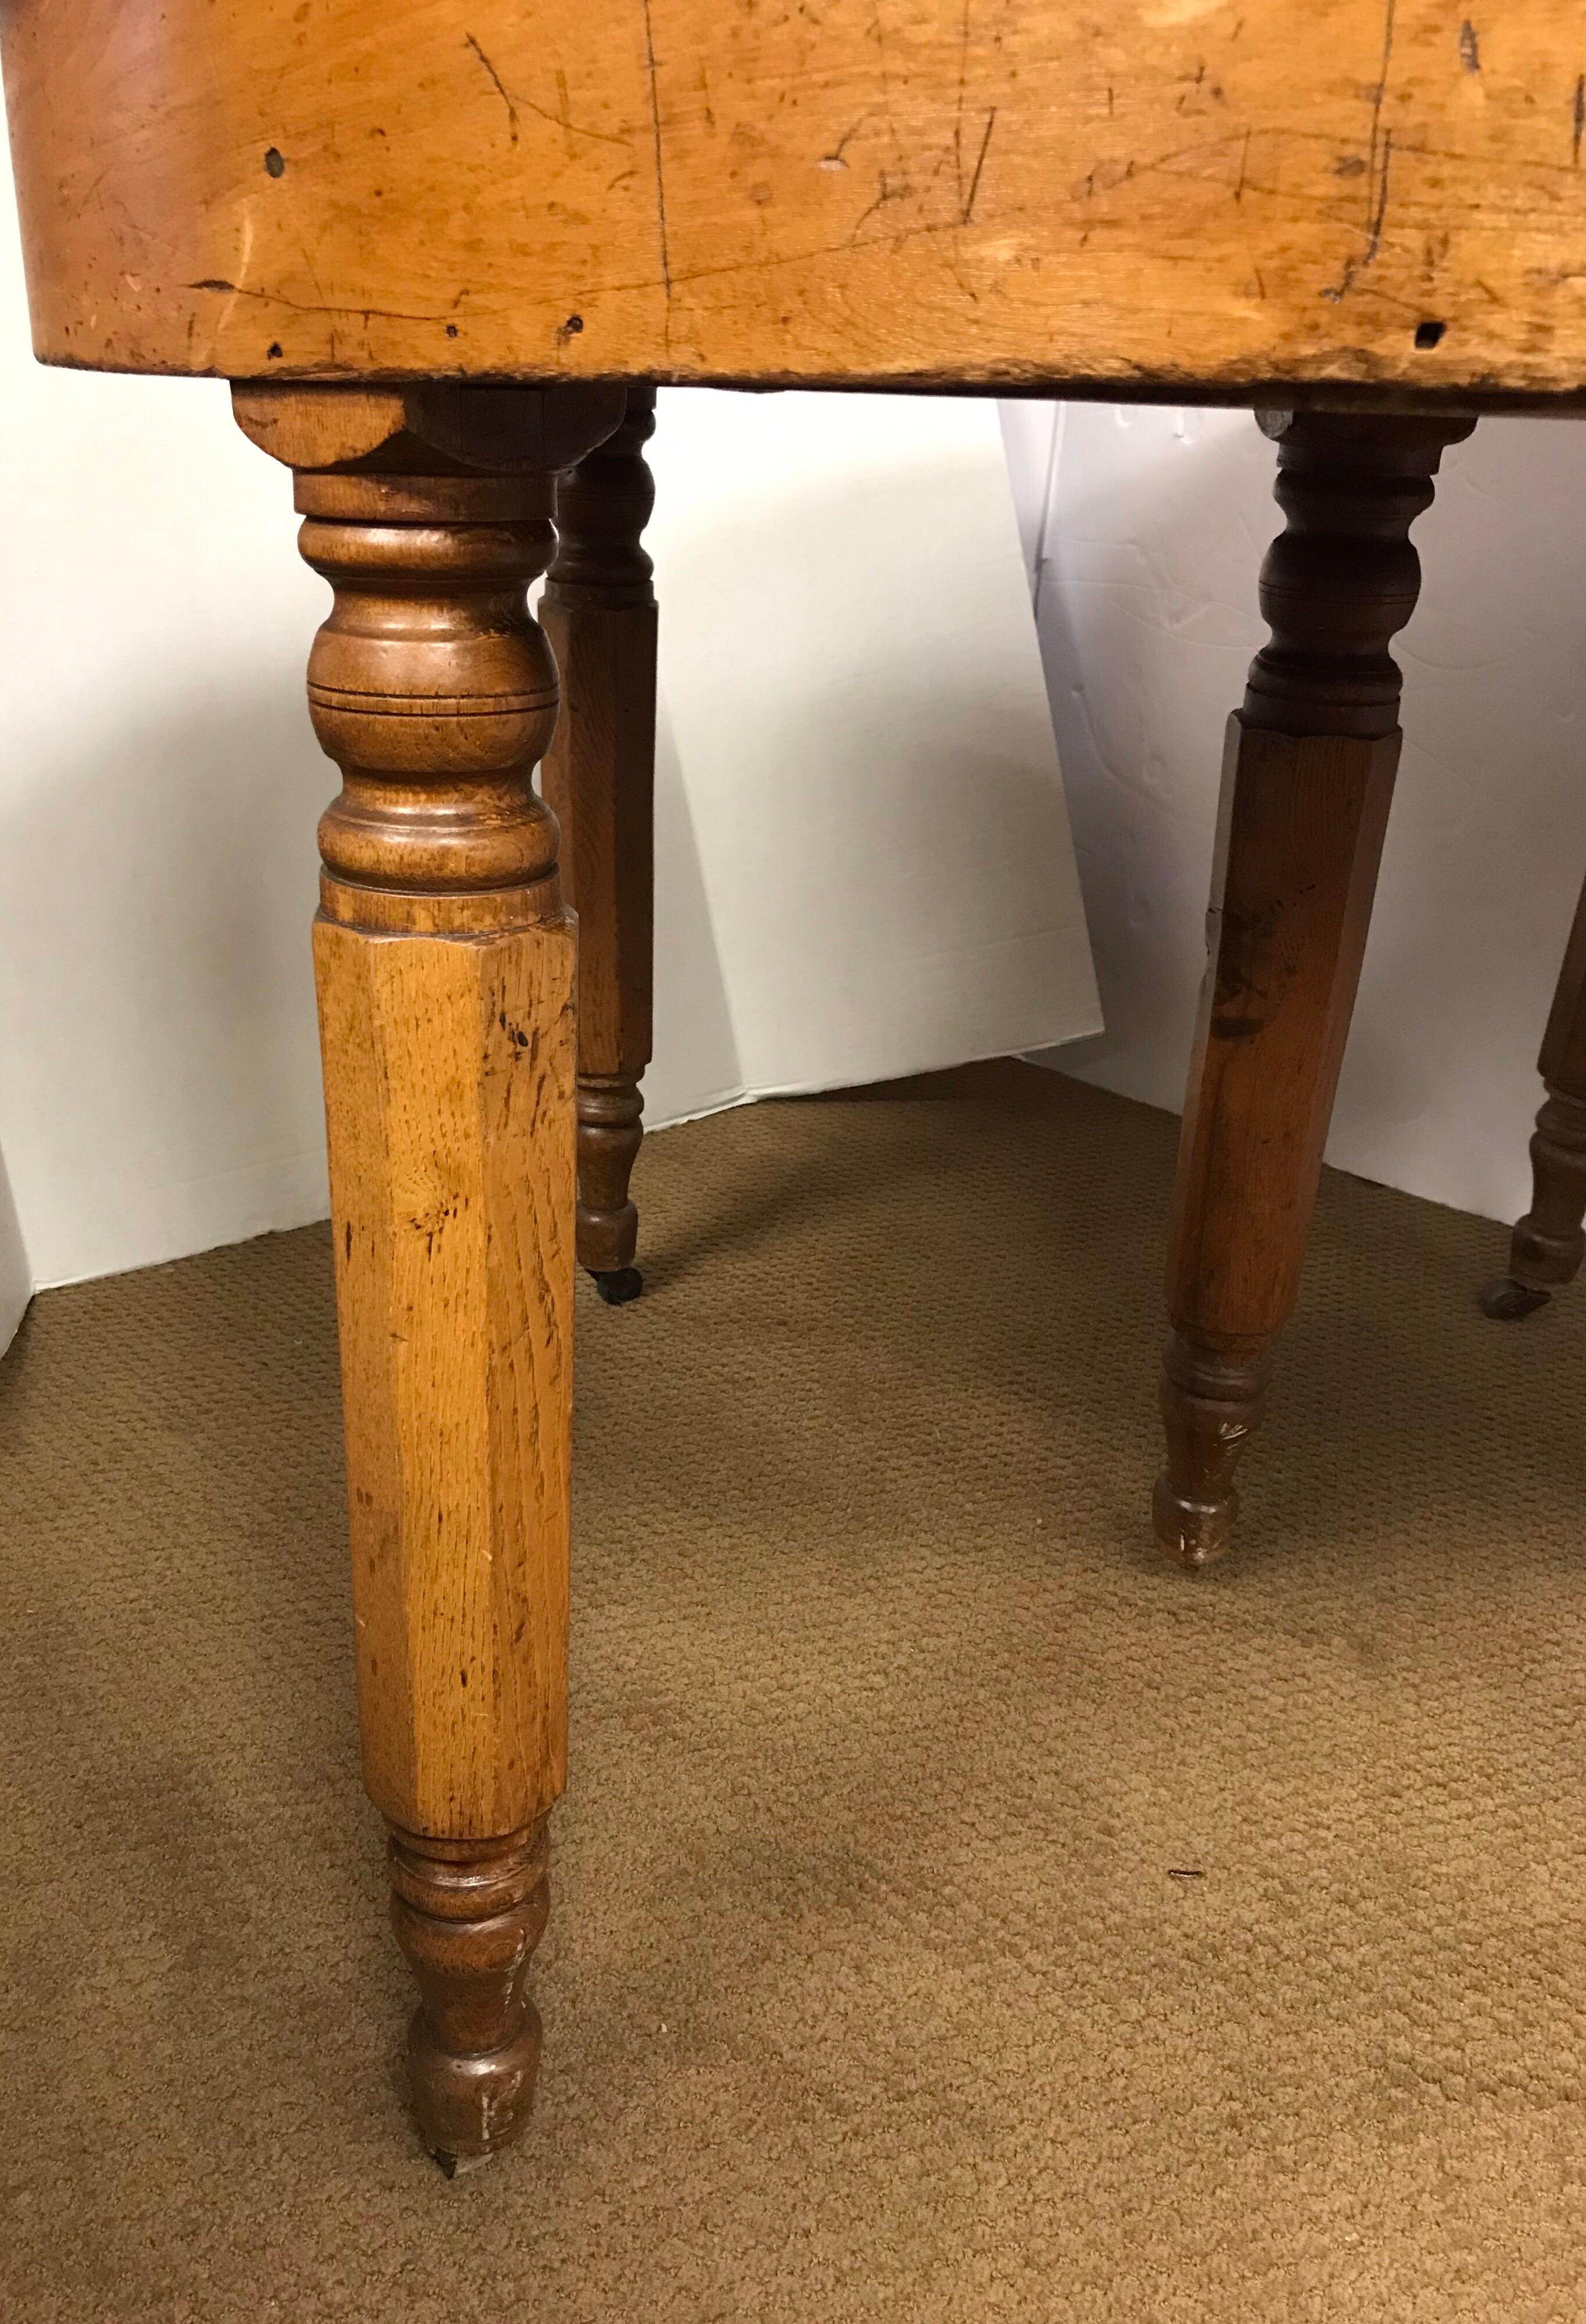 antique round pine table